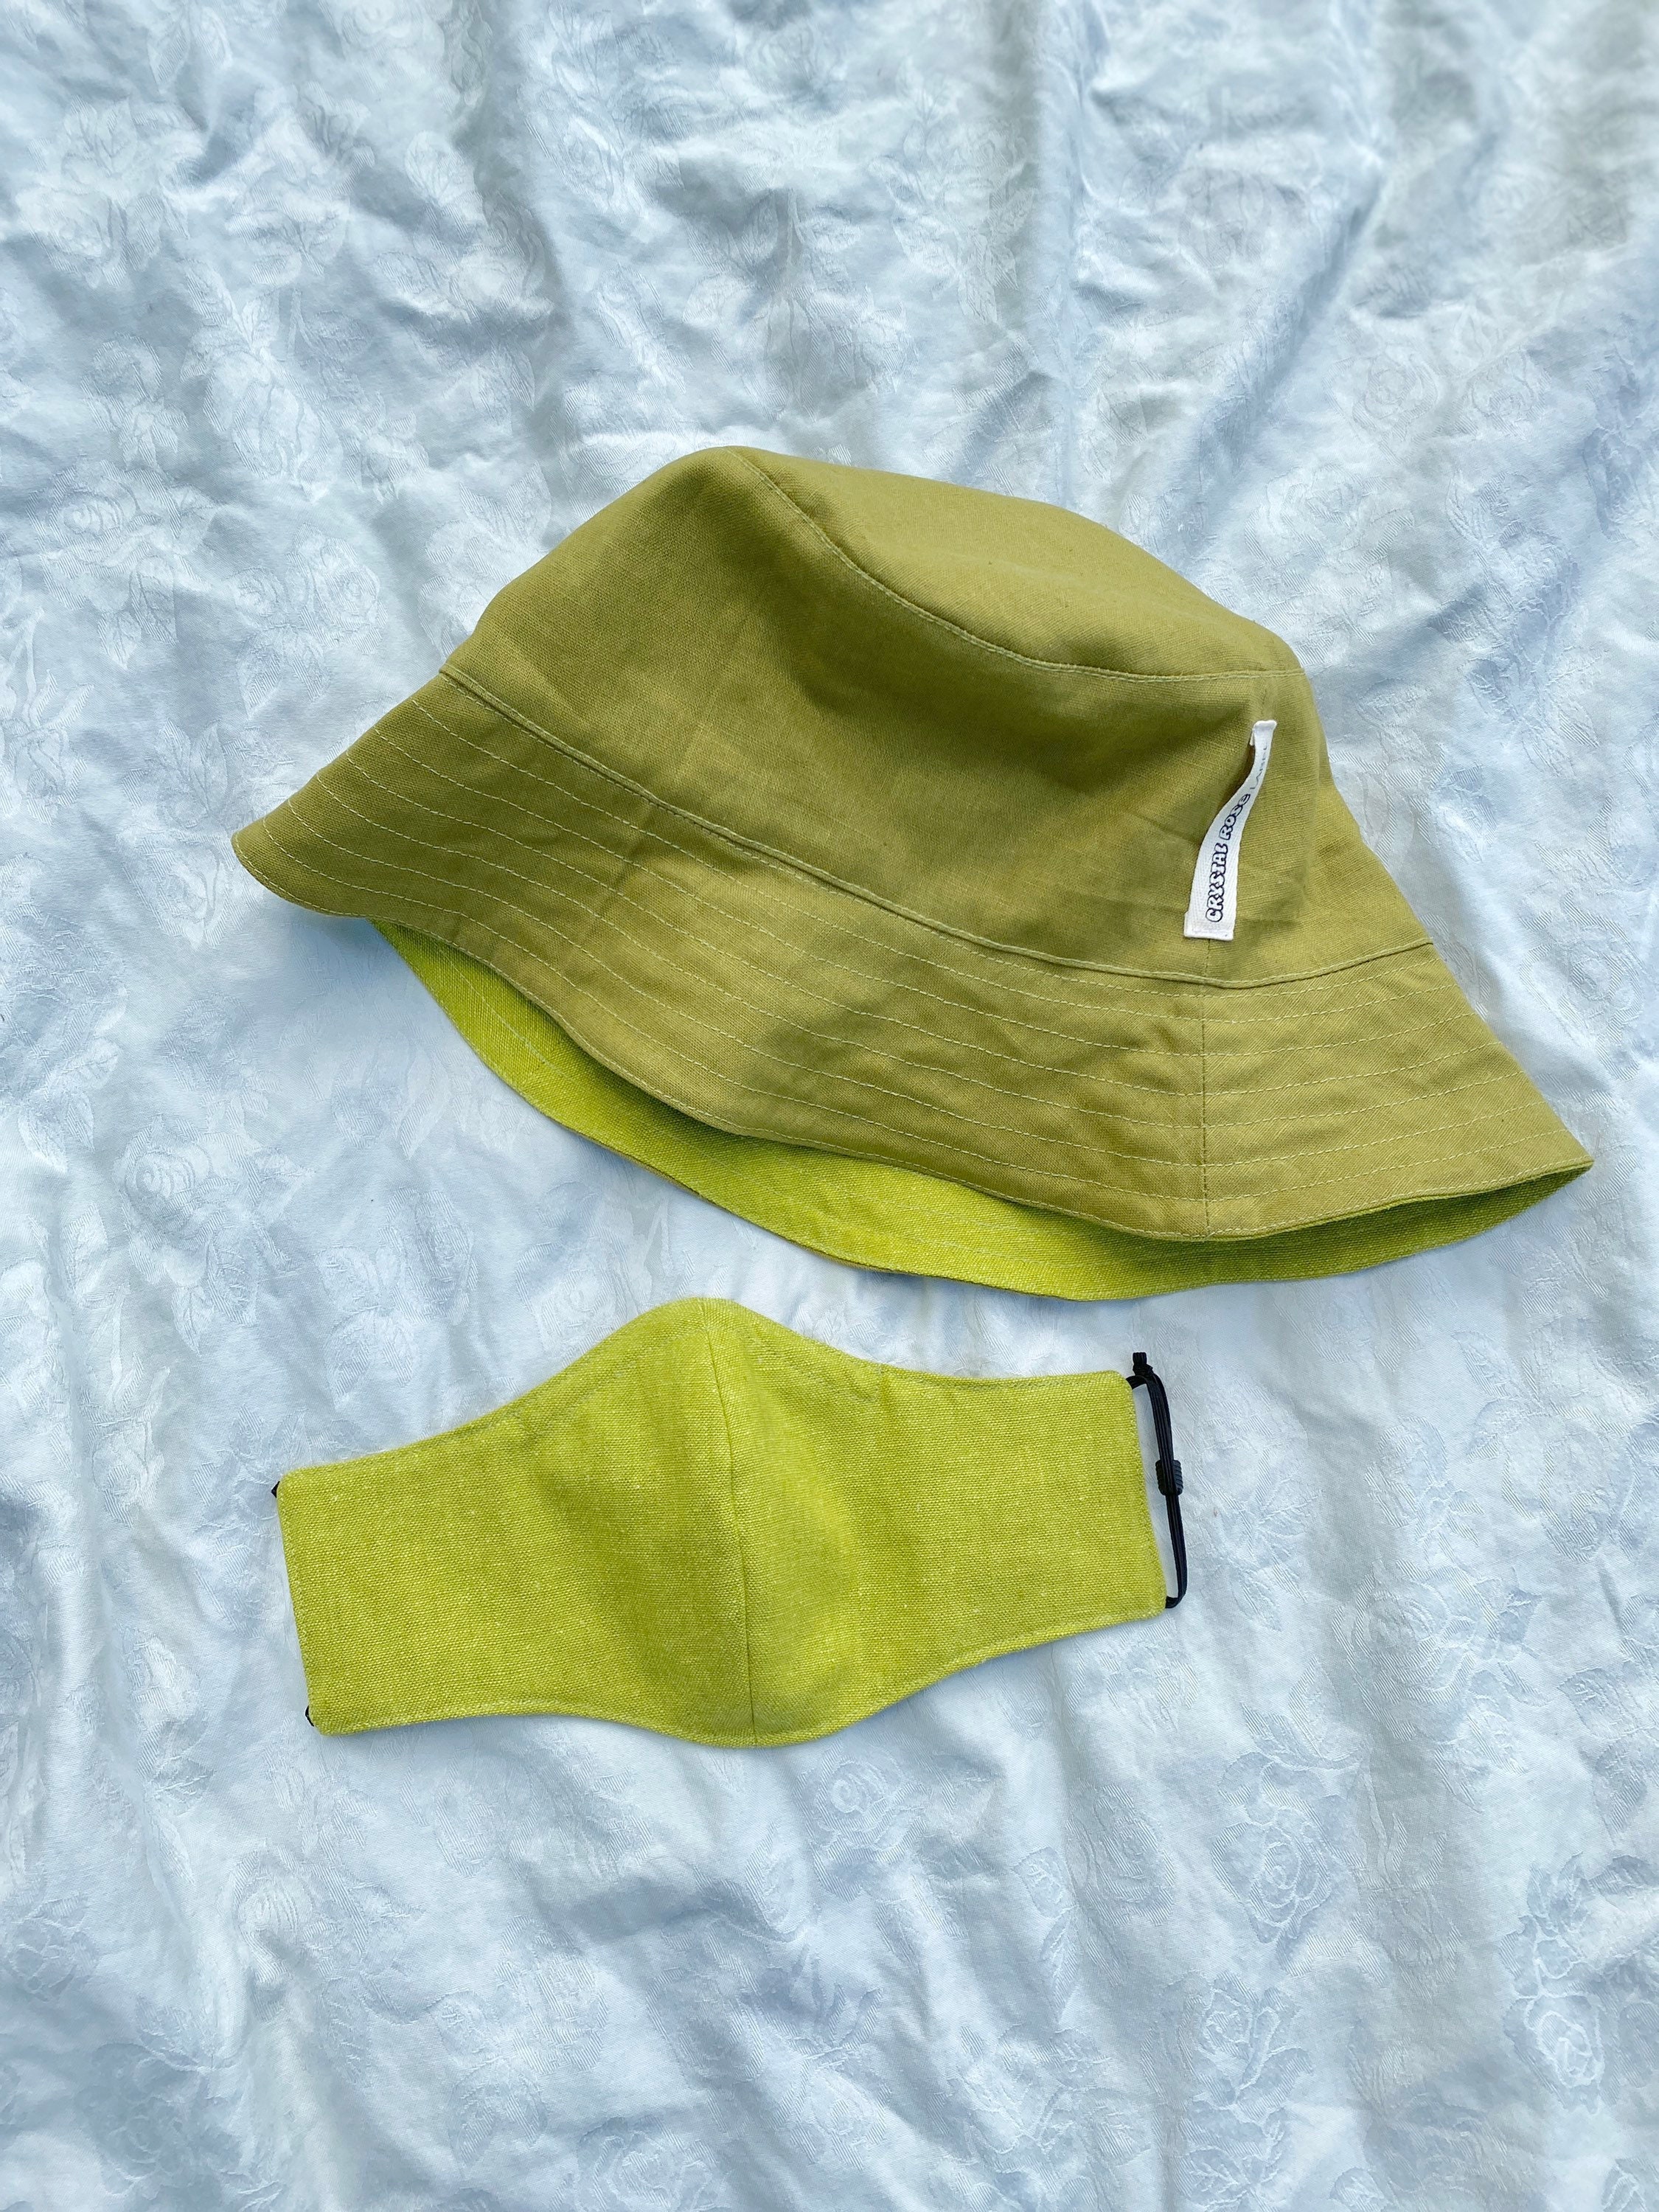 Unisex Linen Cotton Blend Shady Bucket Sun Hat Handmade Small Medium"